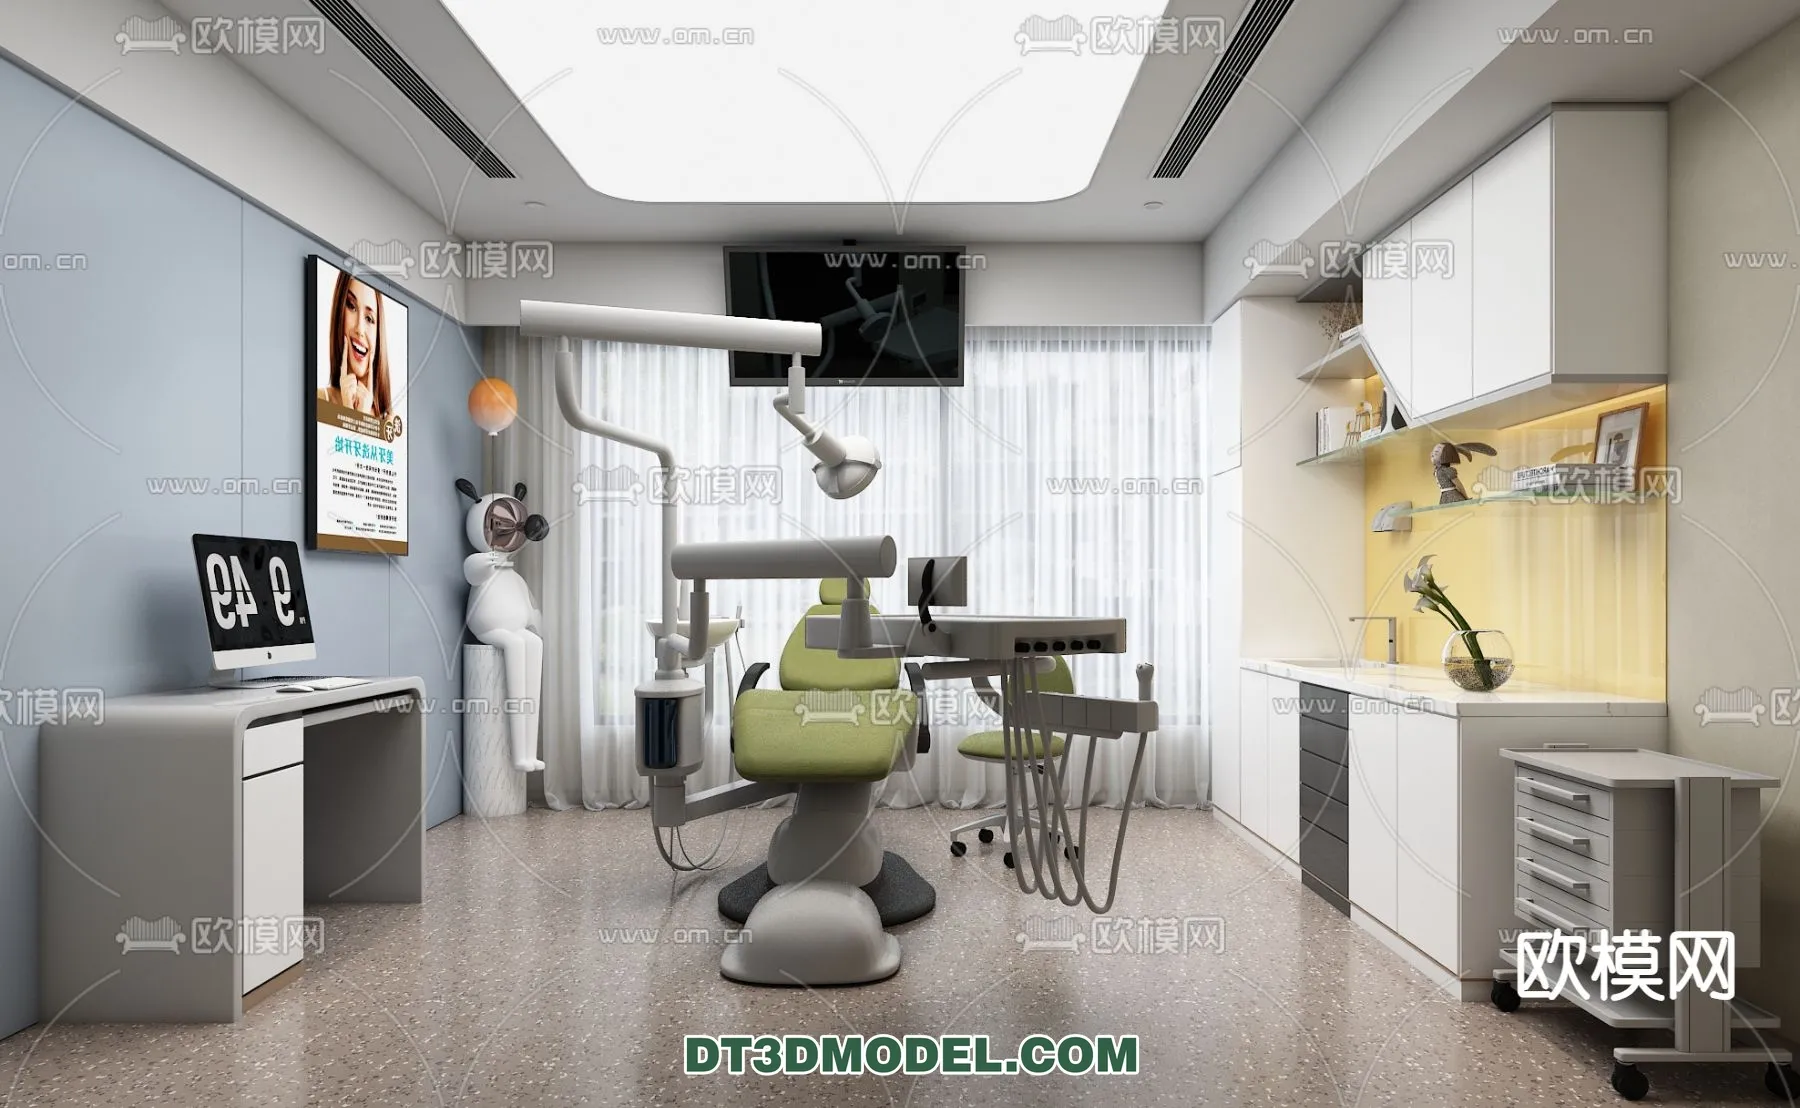 HOSPITAL 3D SCENES – MODERN – 0156